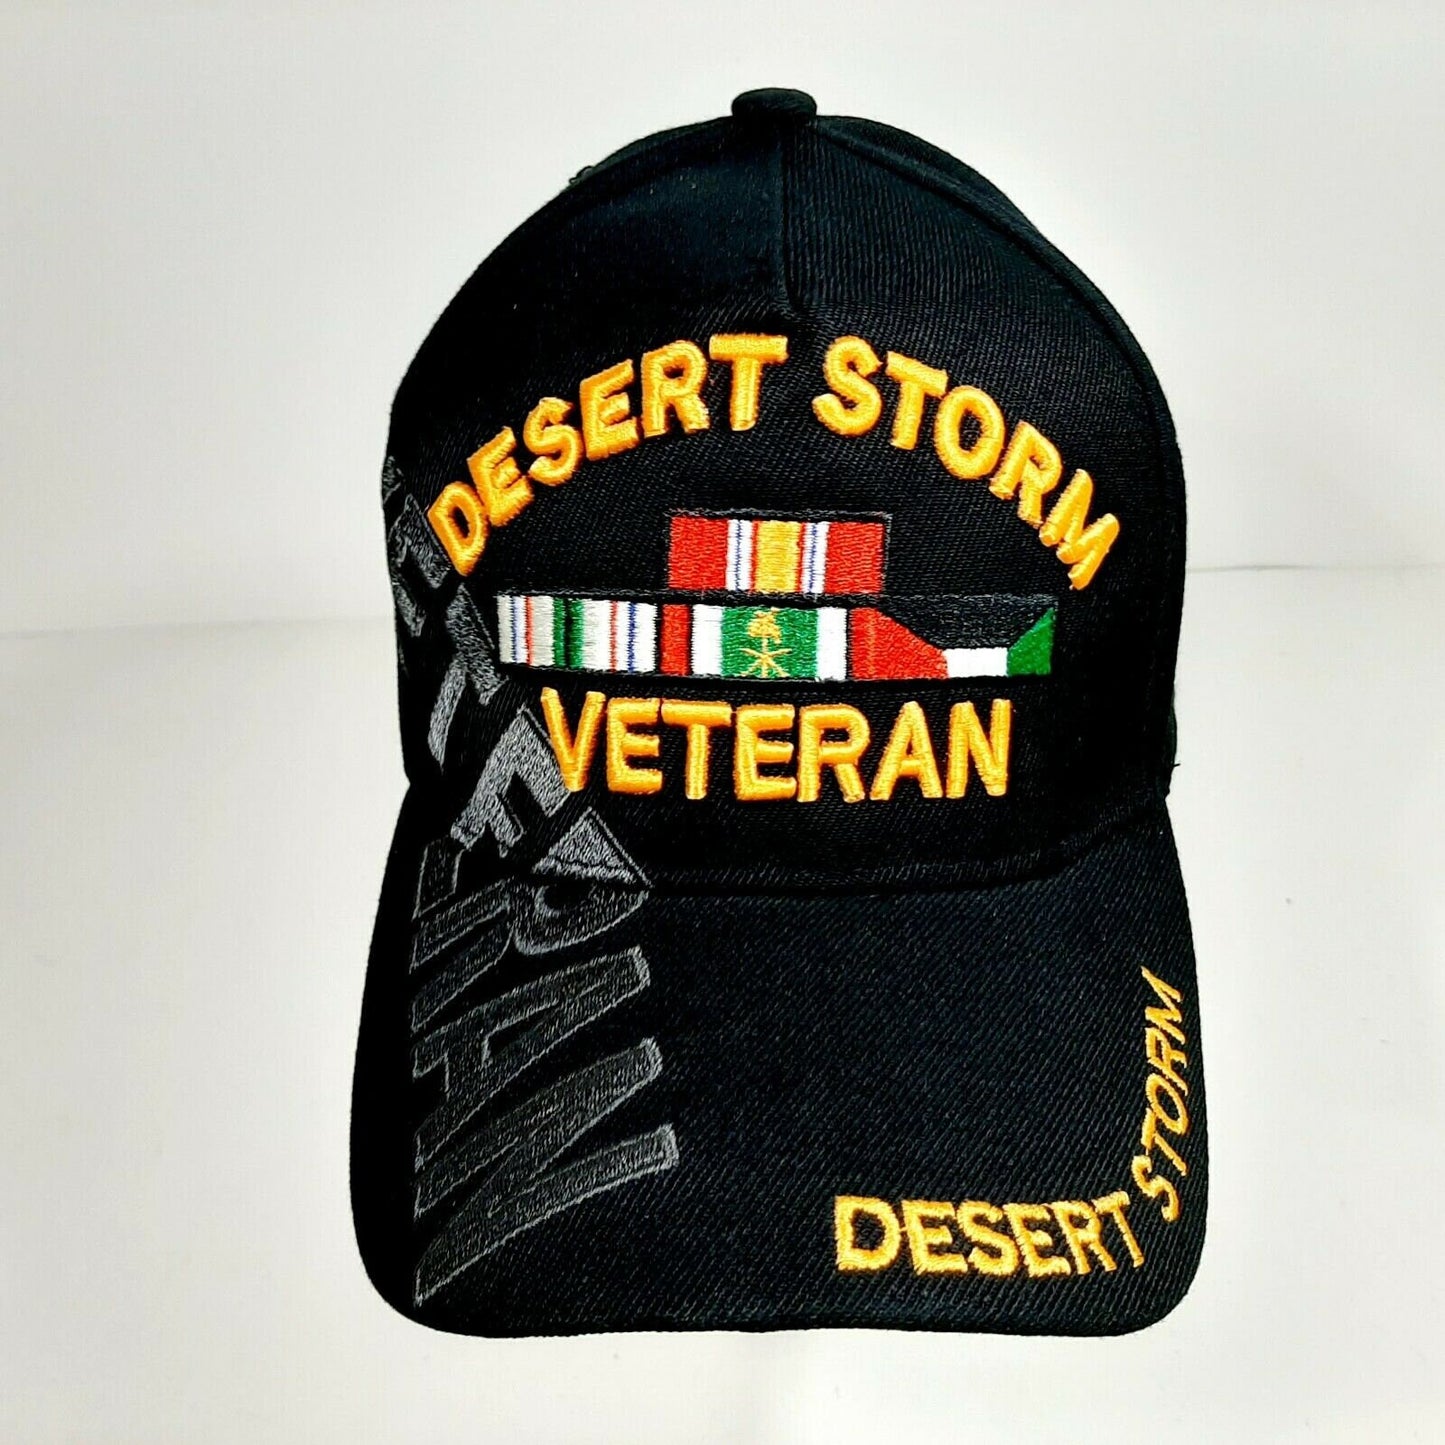 Desert Storm Veteran Men's Ball Cap Black Embroidered Acrylic